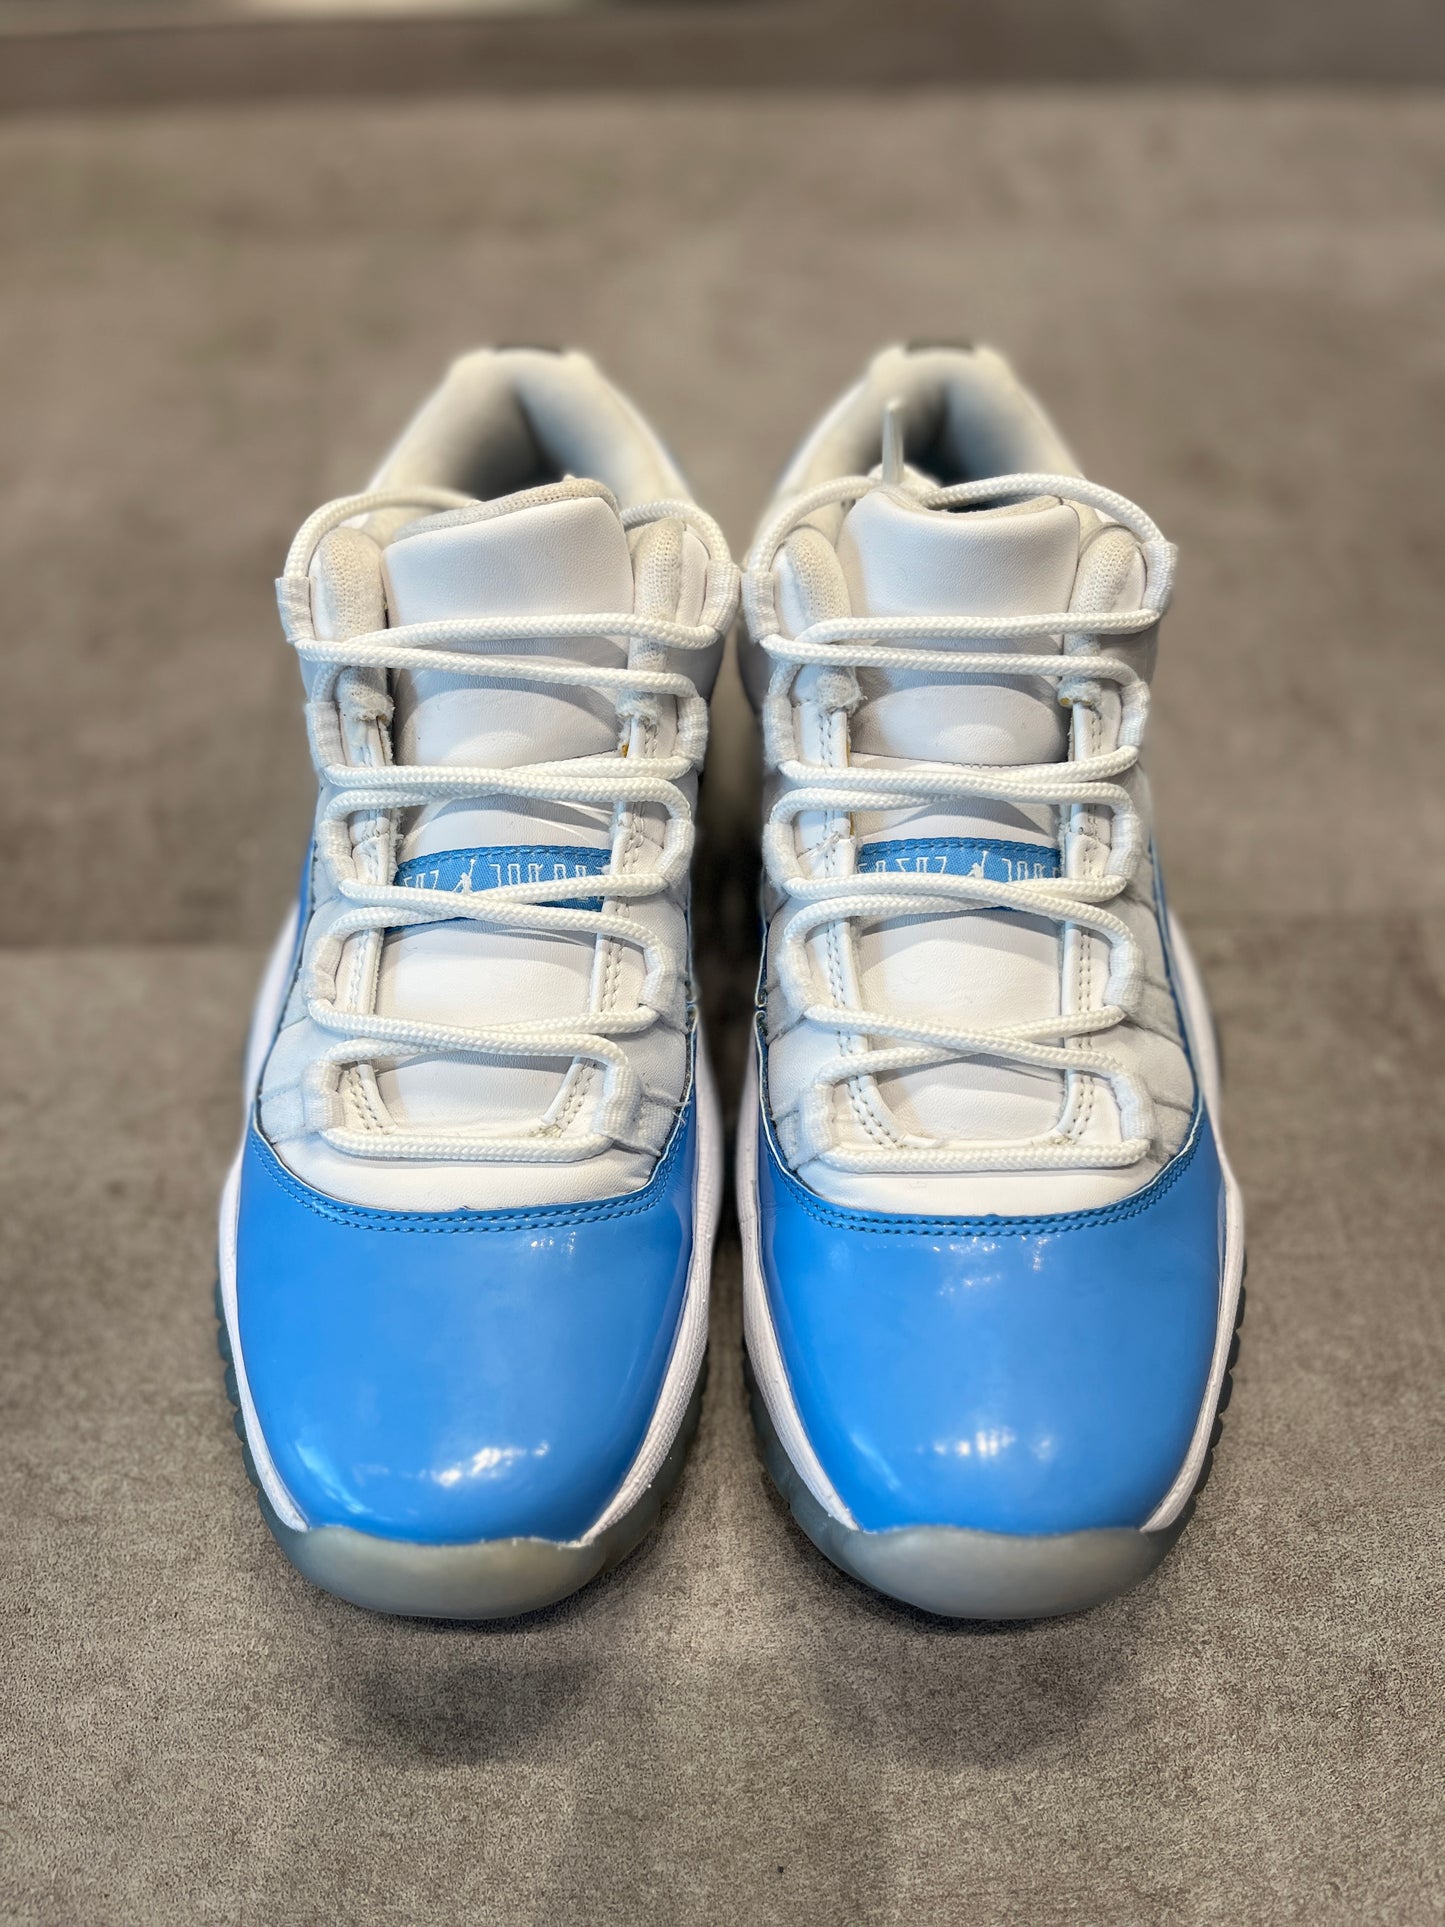 Jordan 11 Retro Low University Blue GS (Preowned Size 6y)